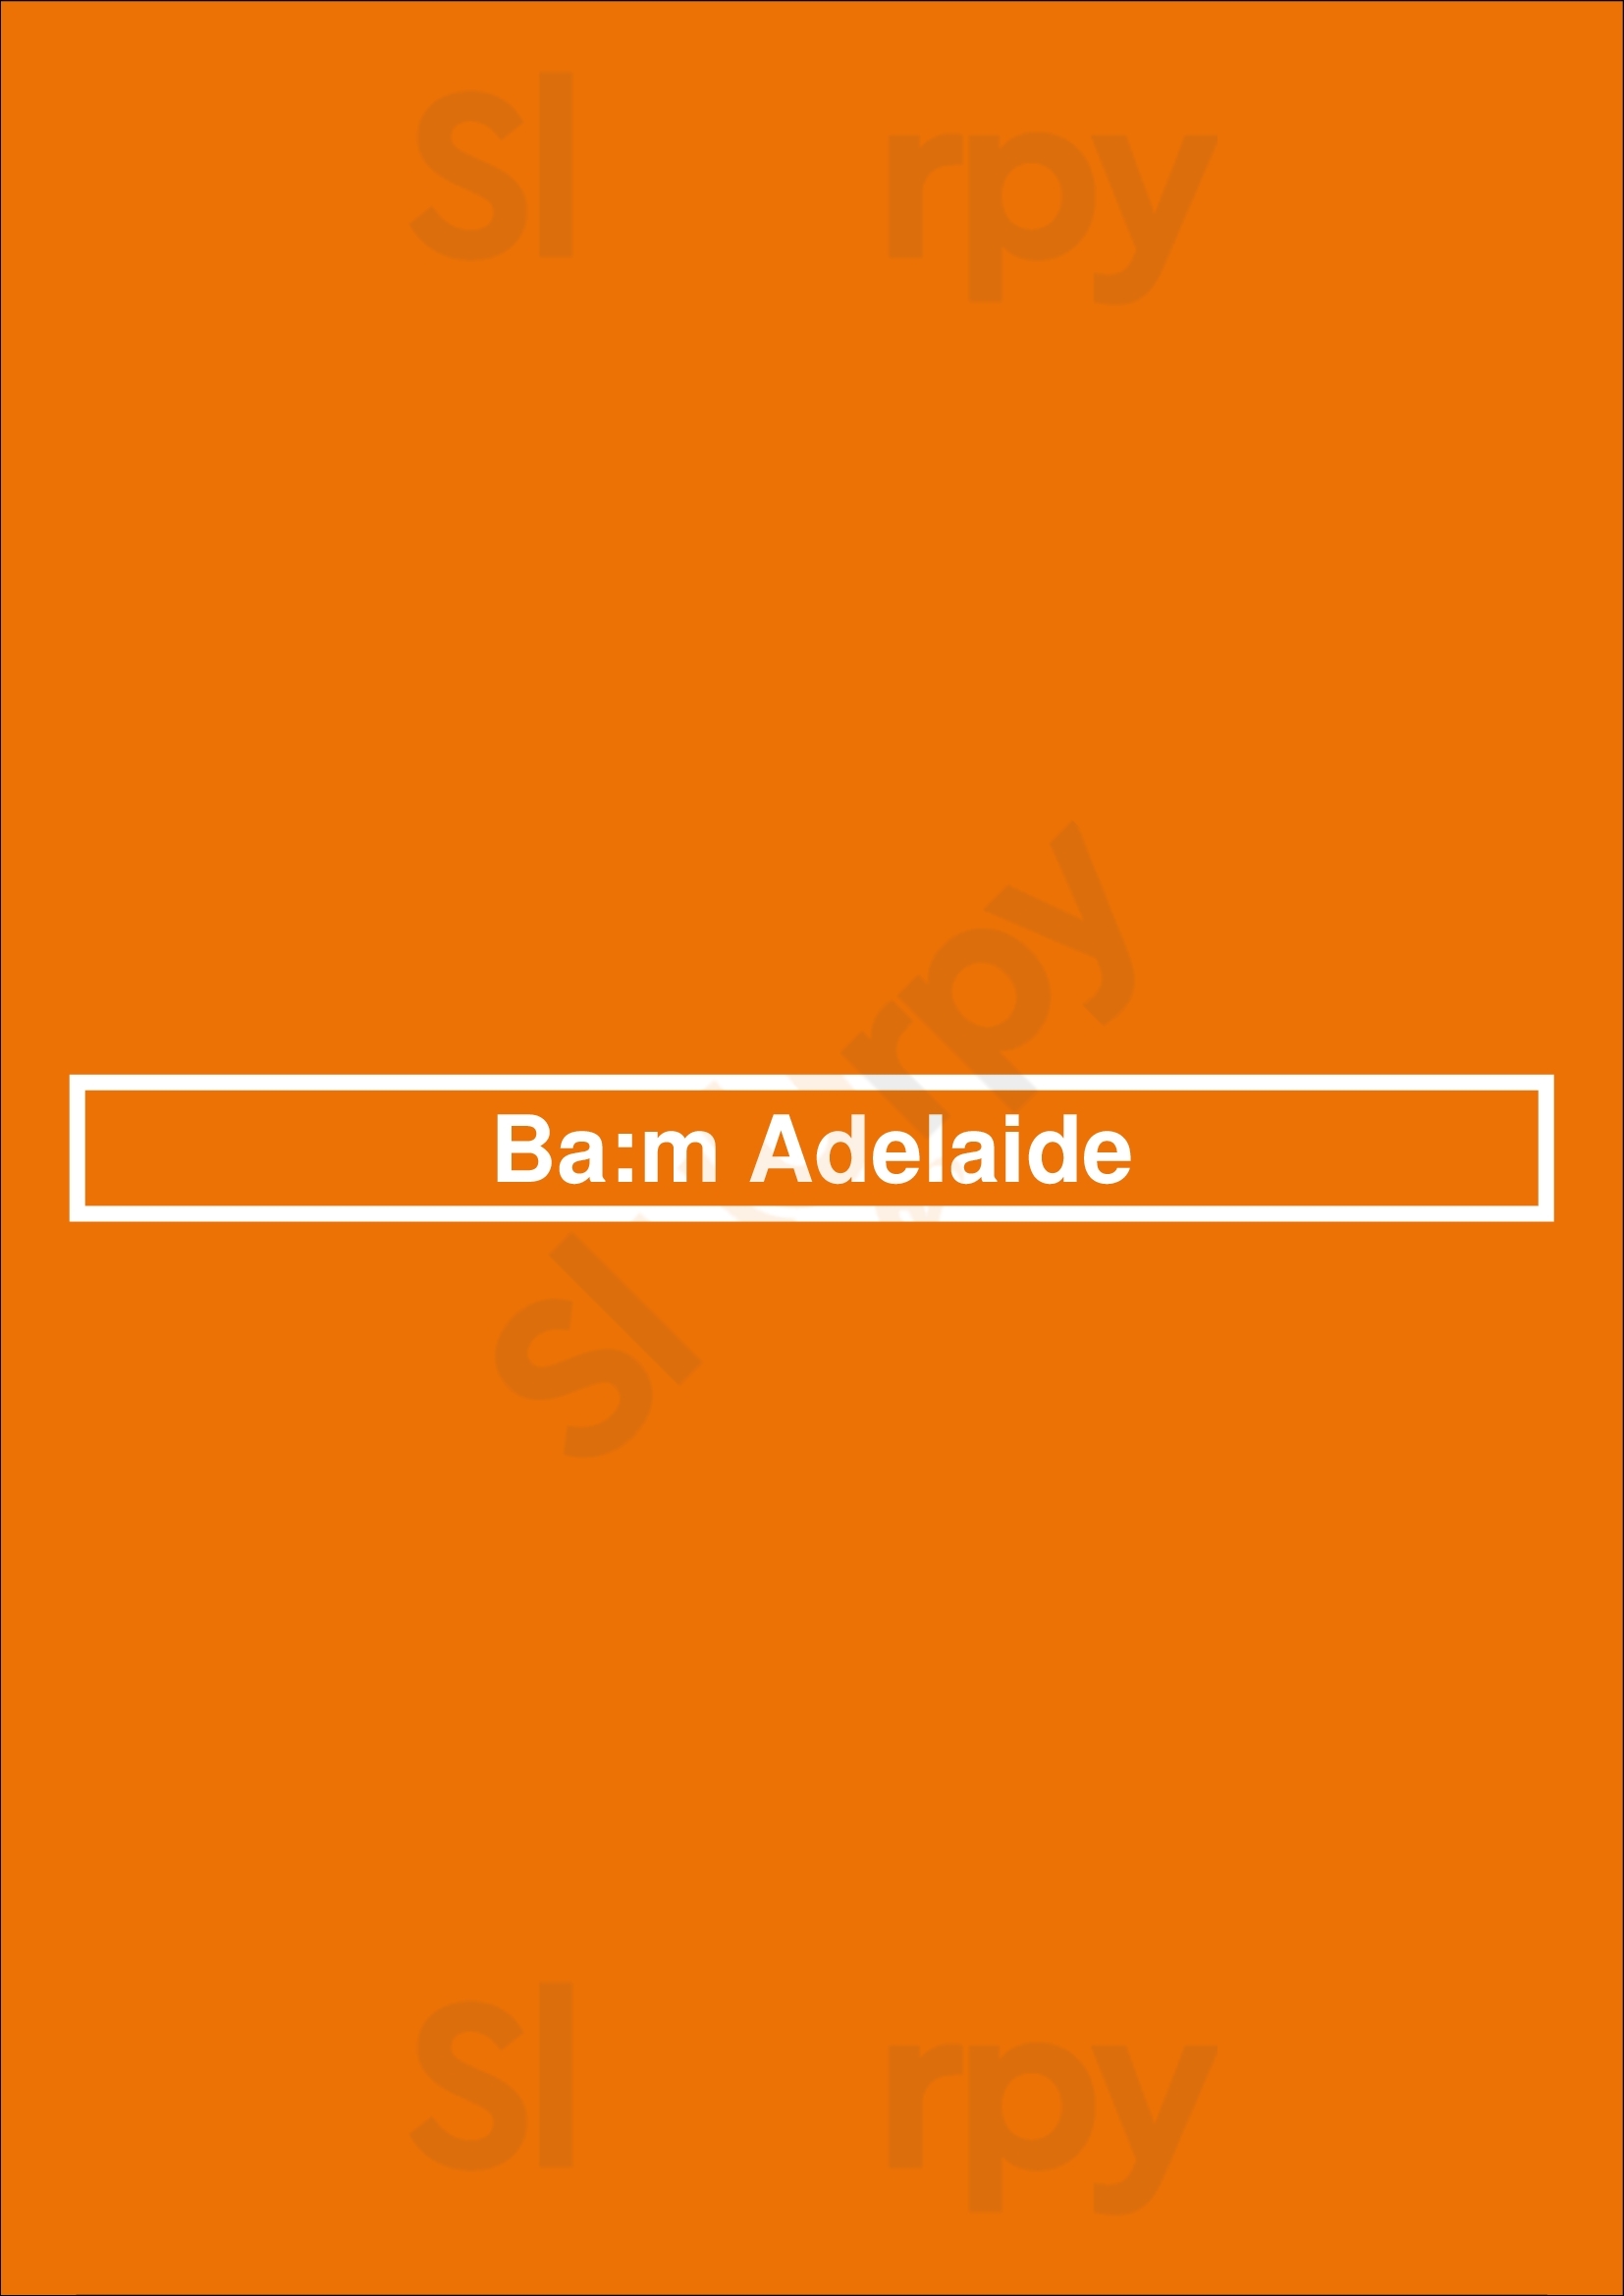 Ba:m Adelaide Adelaide Menu - 1